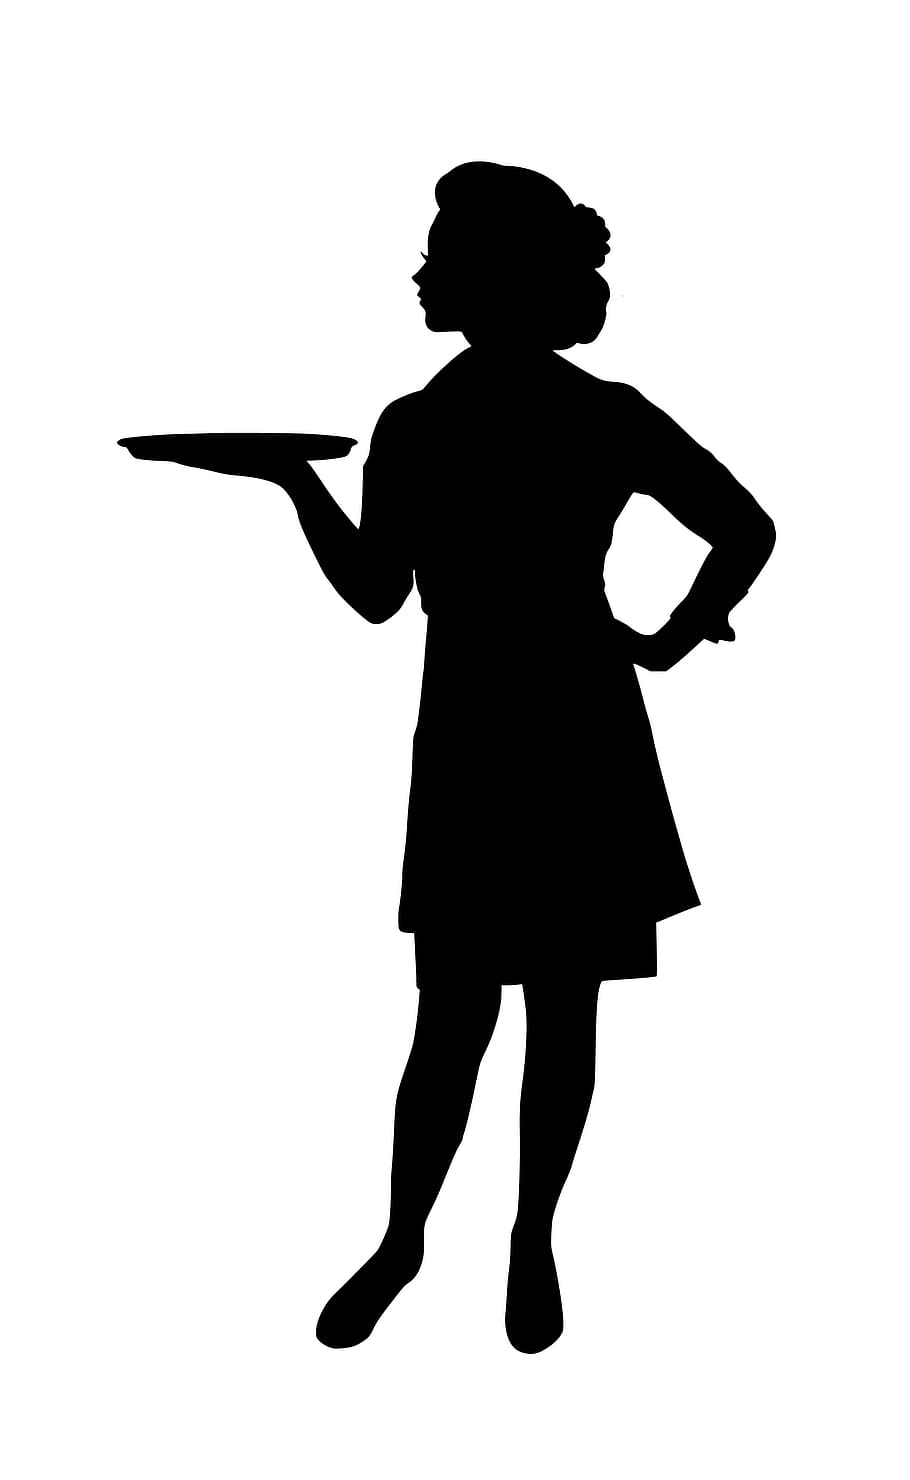 woman waitress, silhouette, waitress, waiter, serving, uniform, service, carrying, employee, female